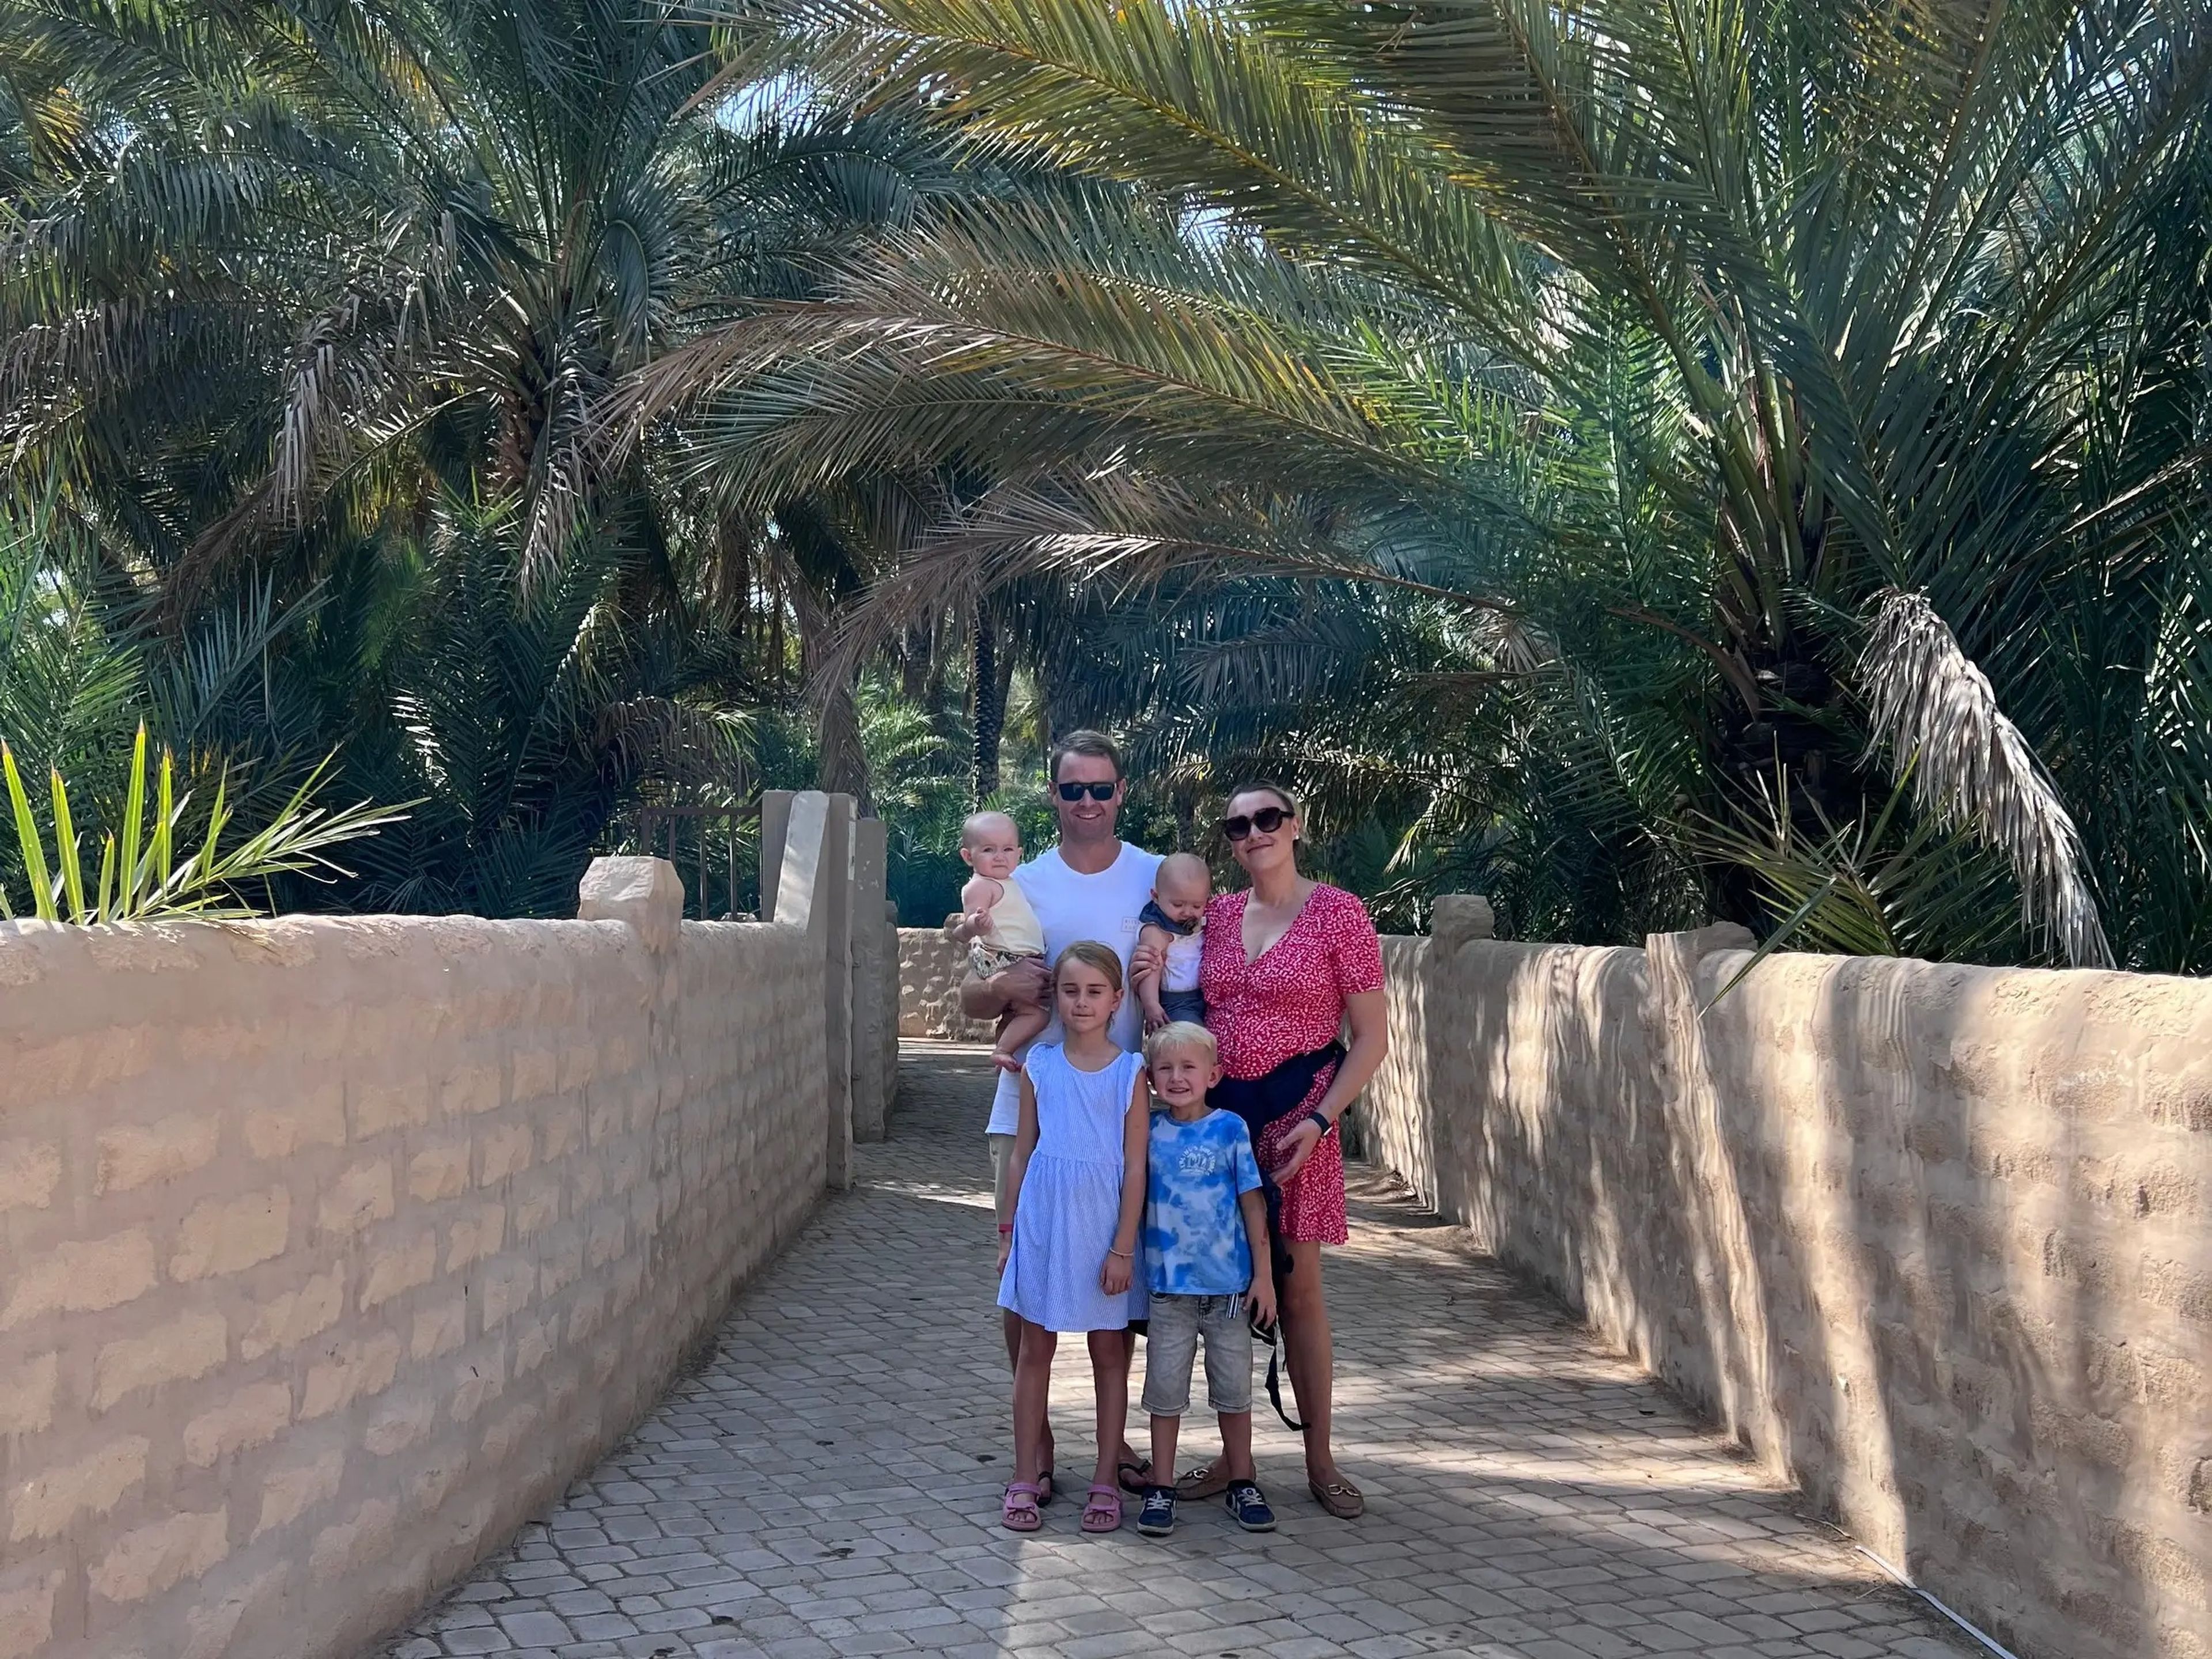 Karen Edwards, her husband and children at the Al Ain Oasis.